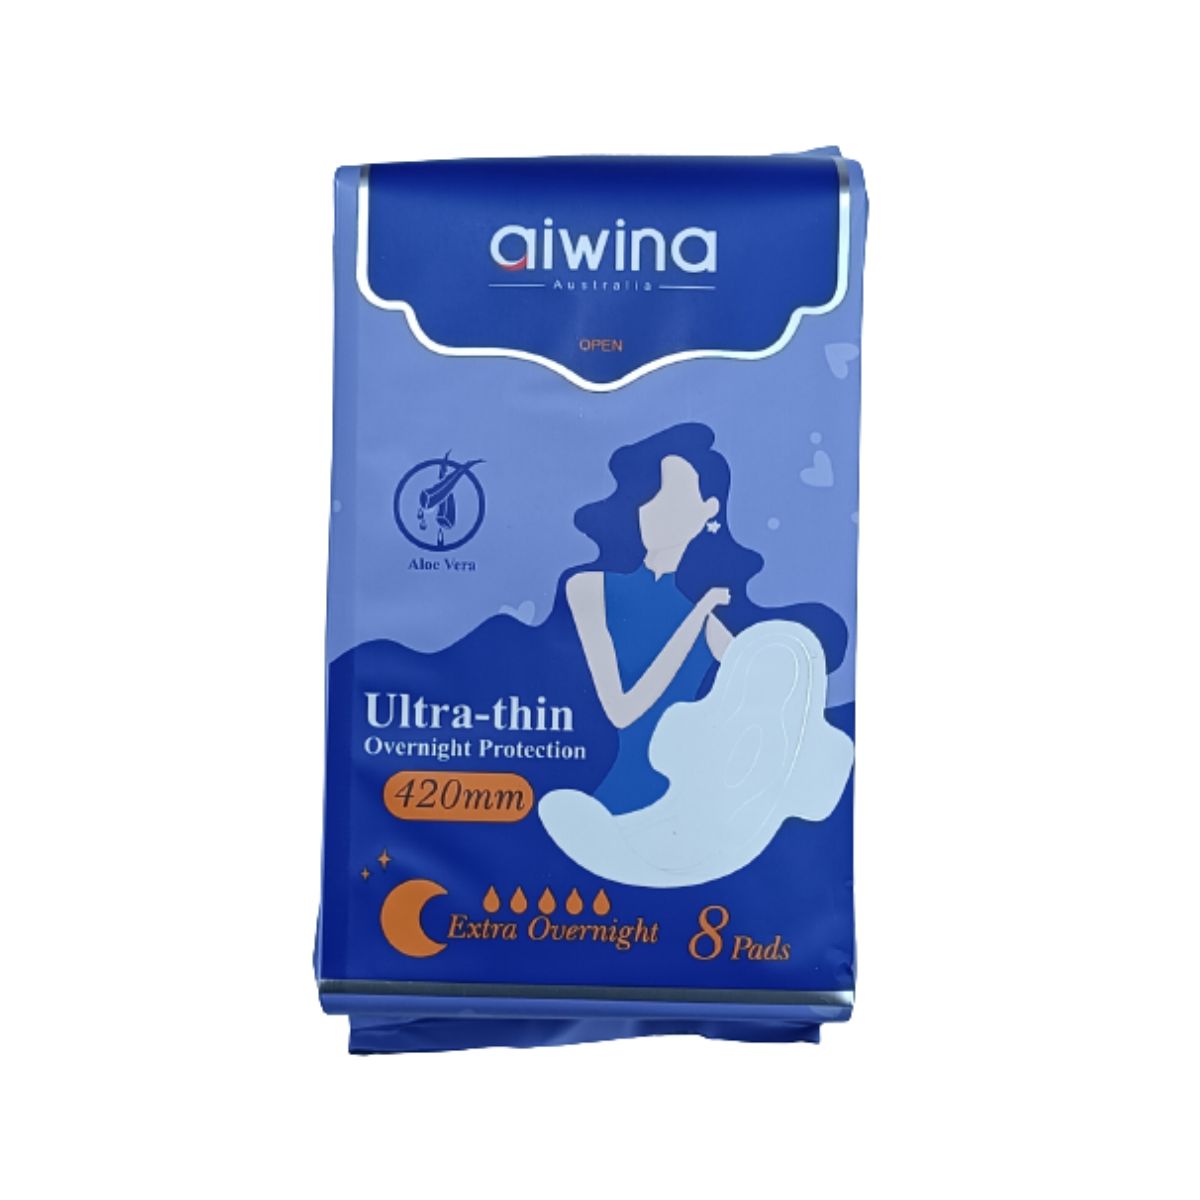 Aiwina Sanitary Napkin Ultra-thin Overnight Protection - Extra Overnight - 420mm - 8pads